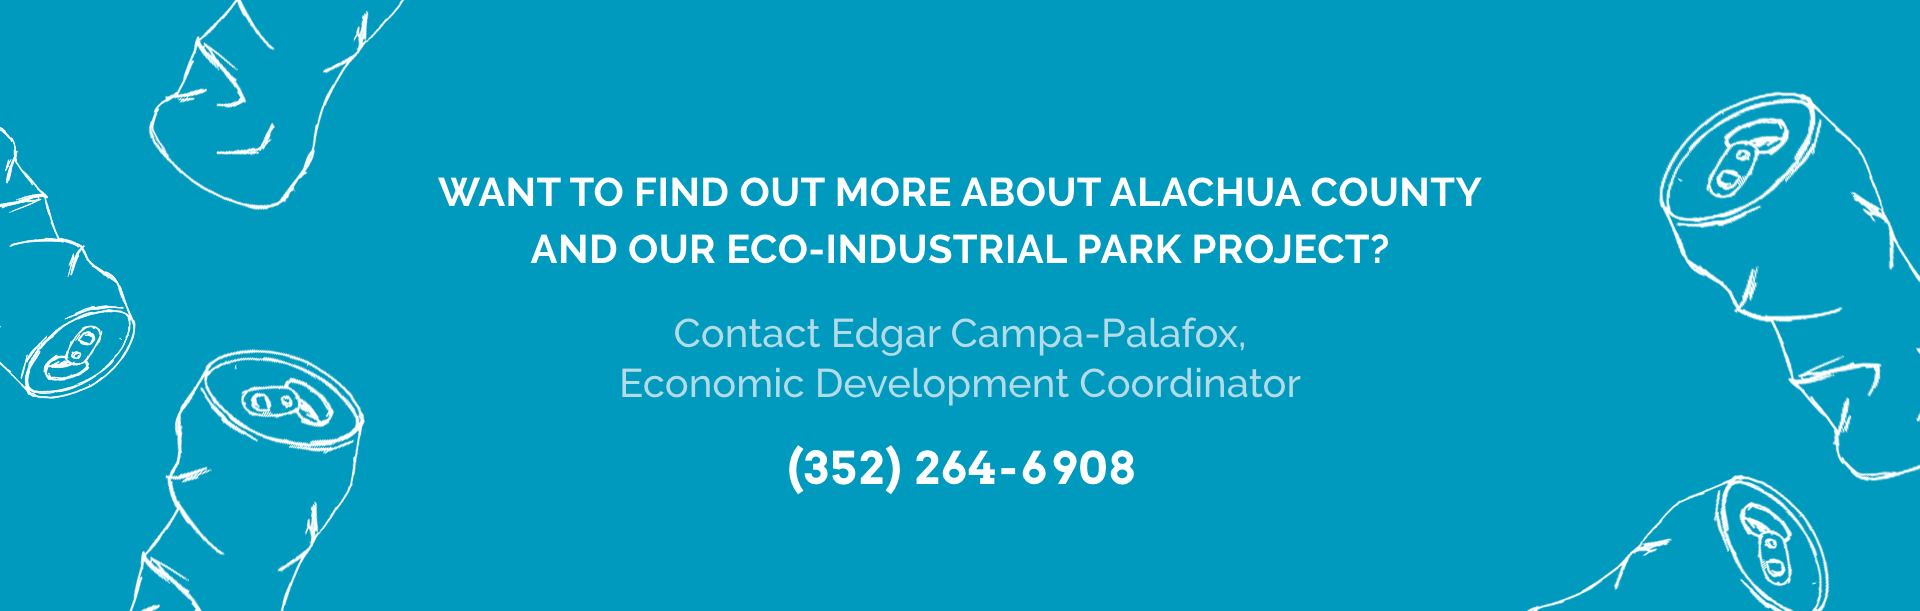 Contact Edgar Campa-Palafox, Economic Development Coordinator at 352-264-6908